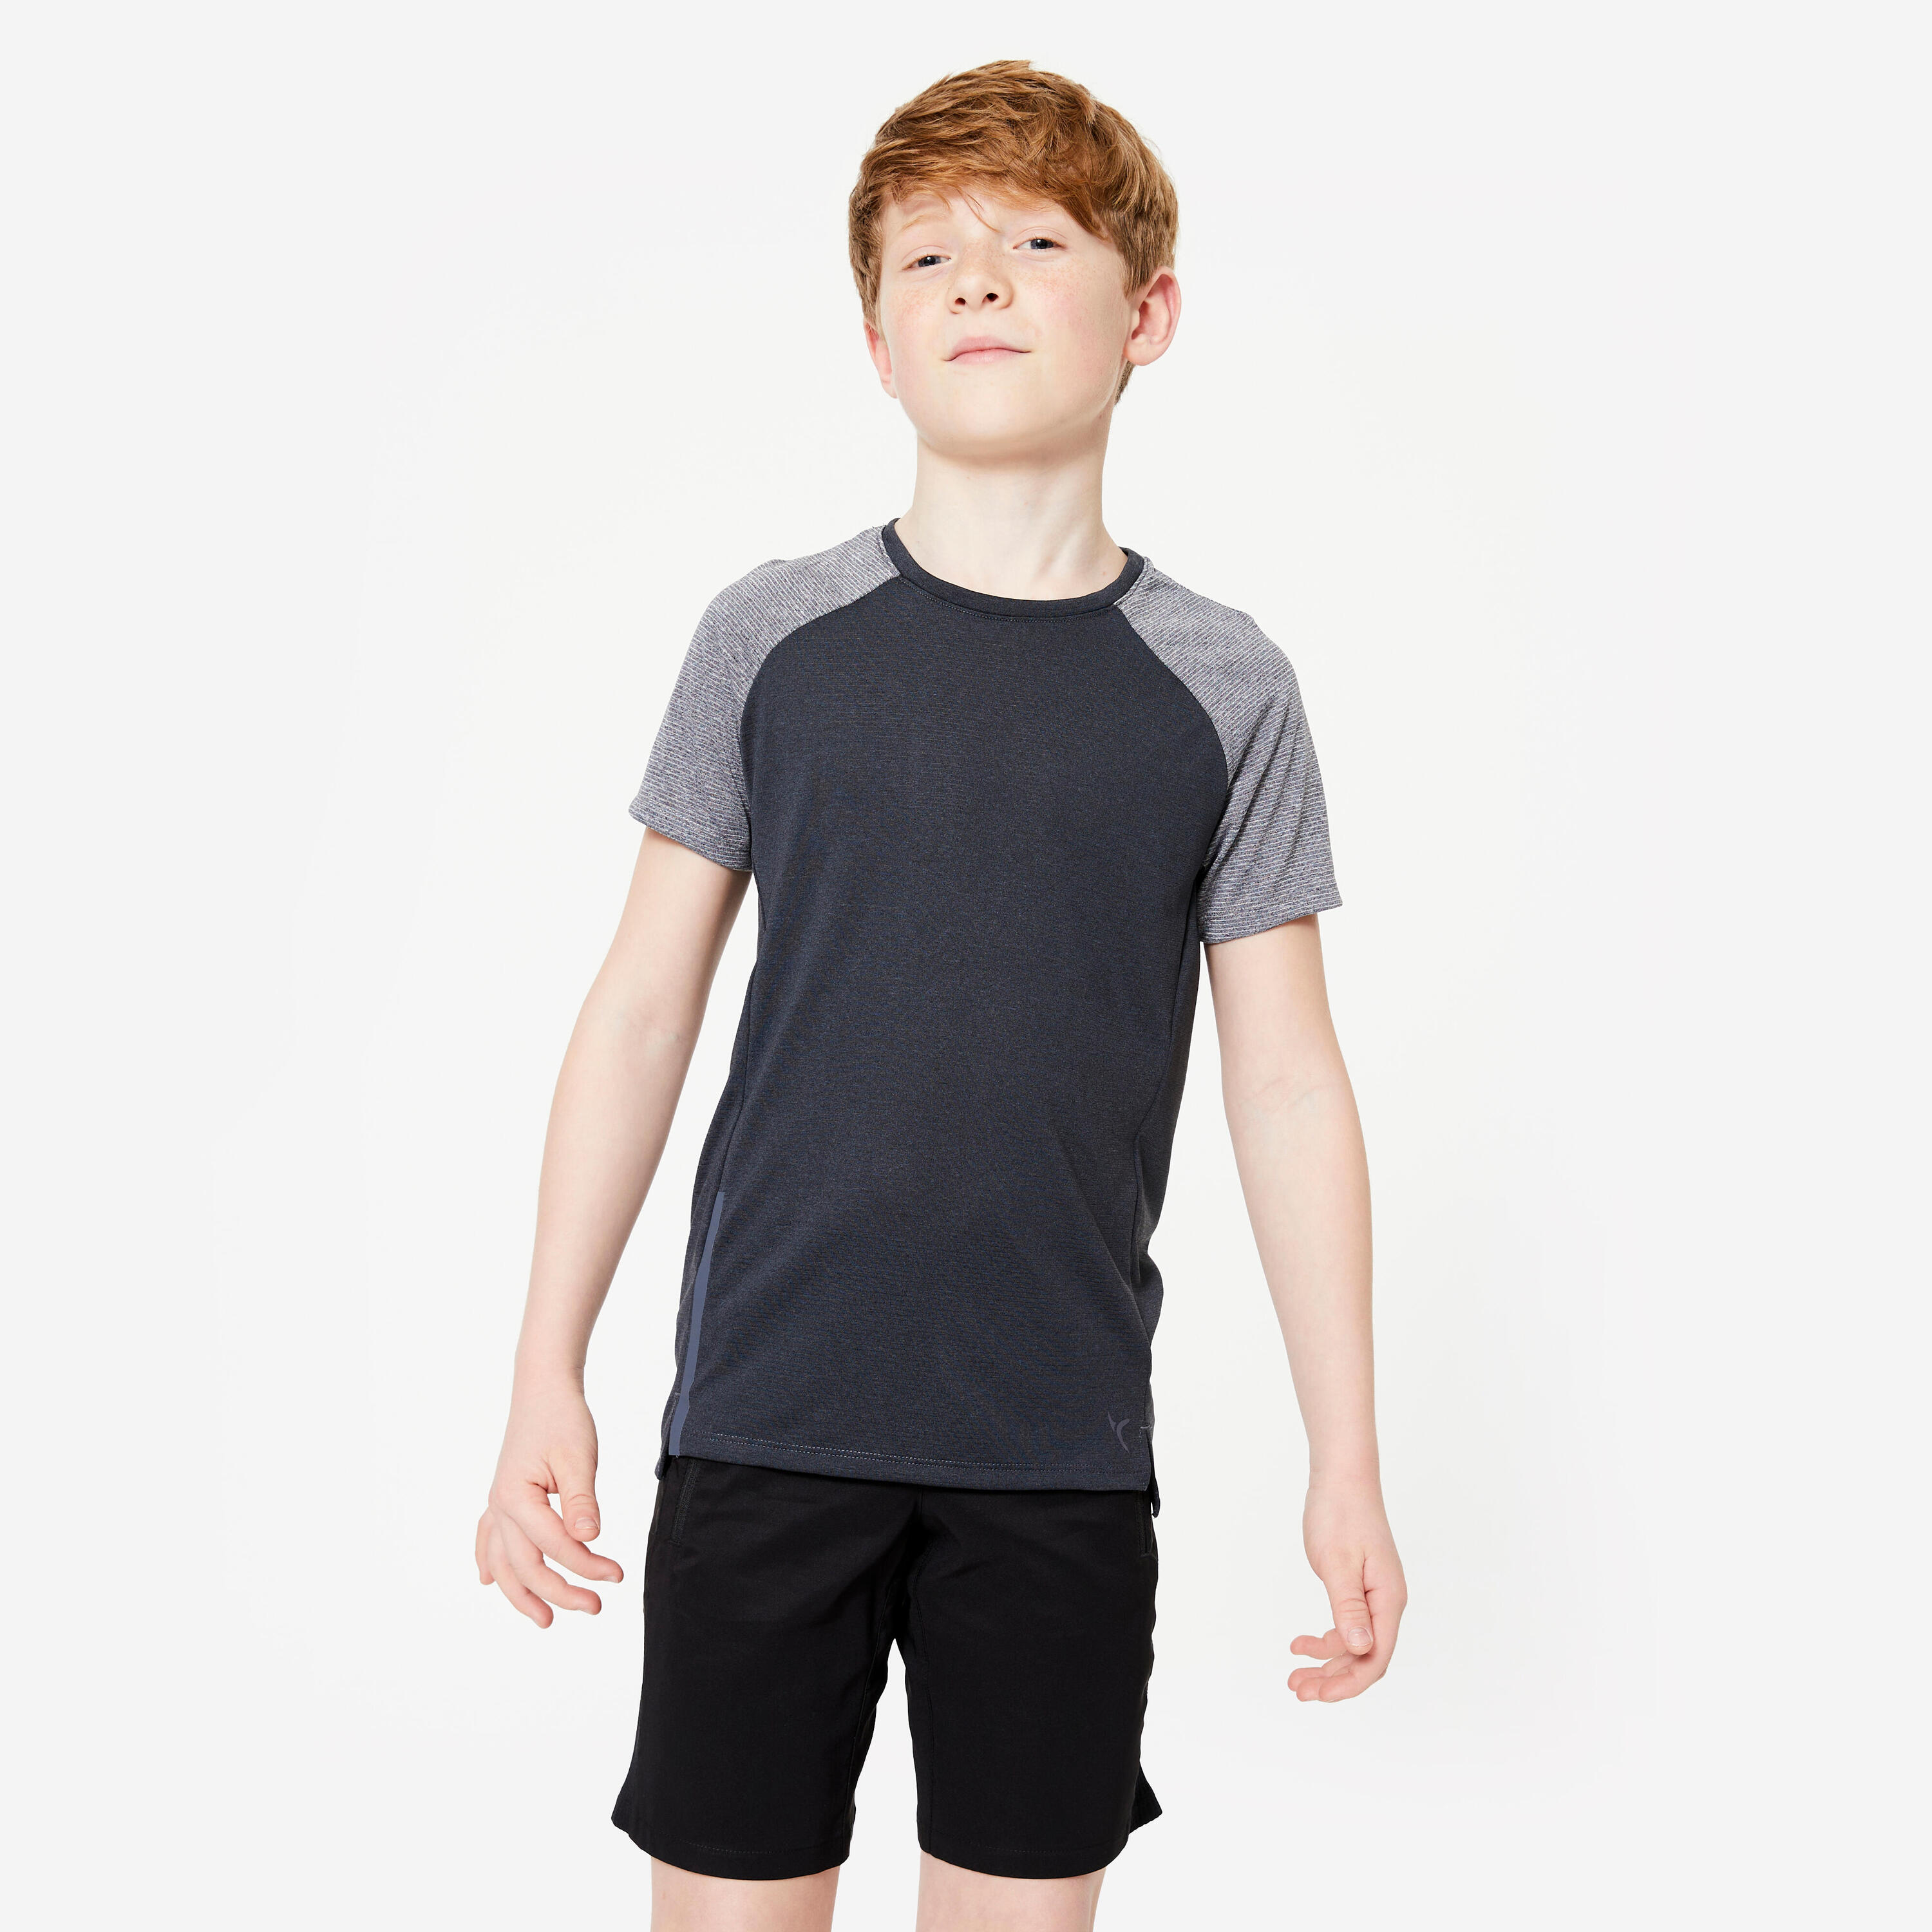 DOMYOS Kids' Technical Breathable T-Shirt S580 - Black